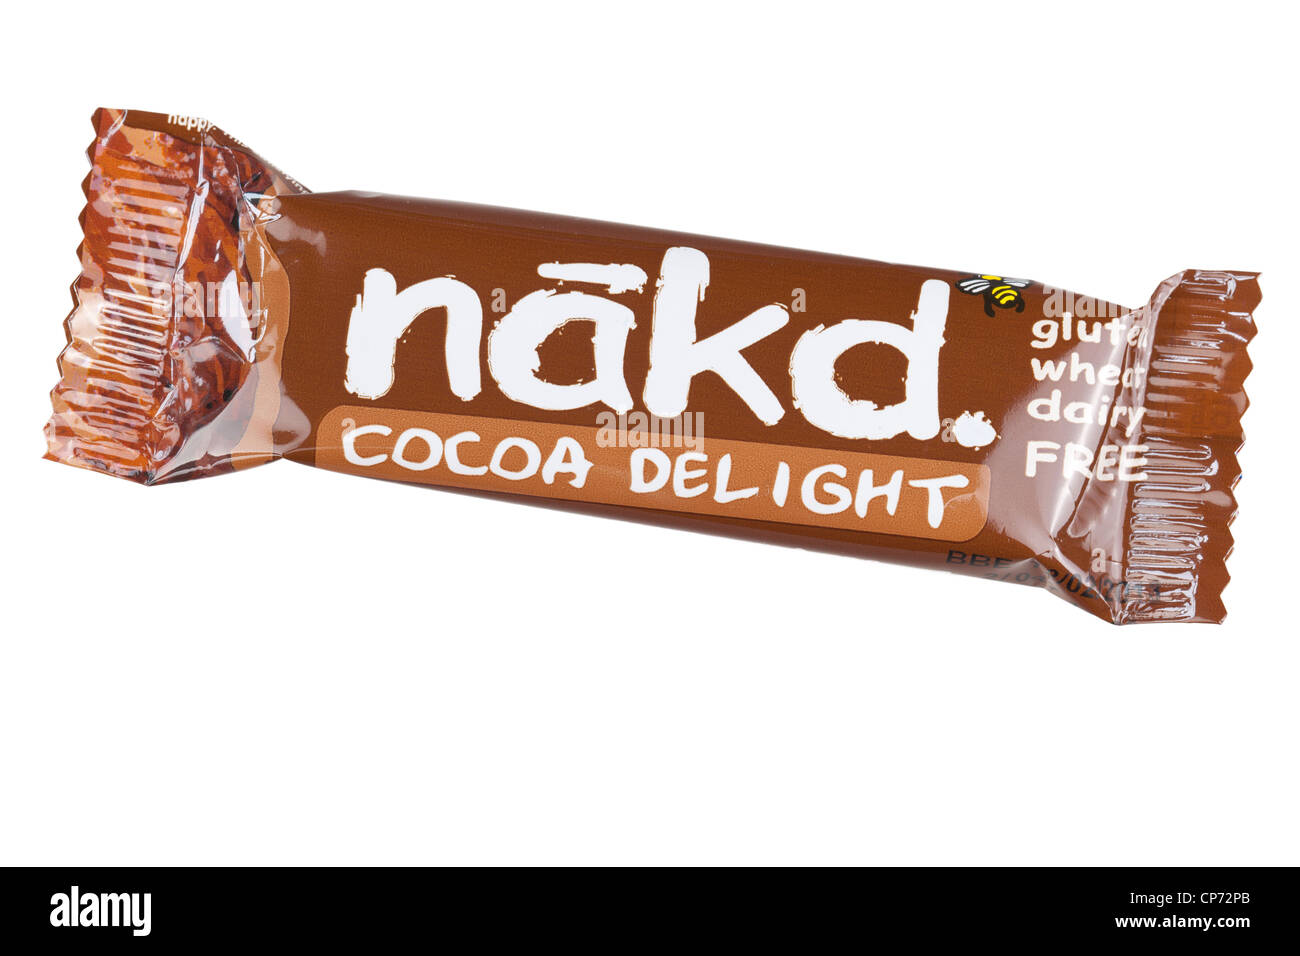 Nakd cocoa delight bar Stock Photo